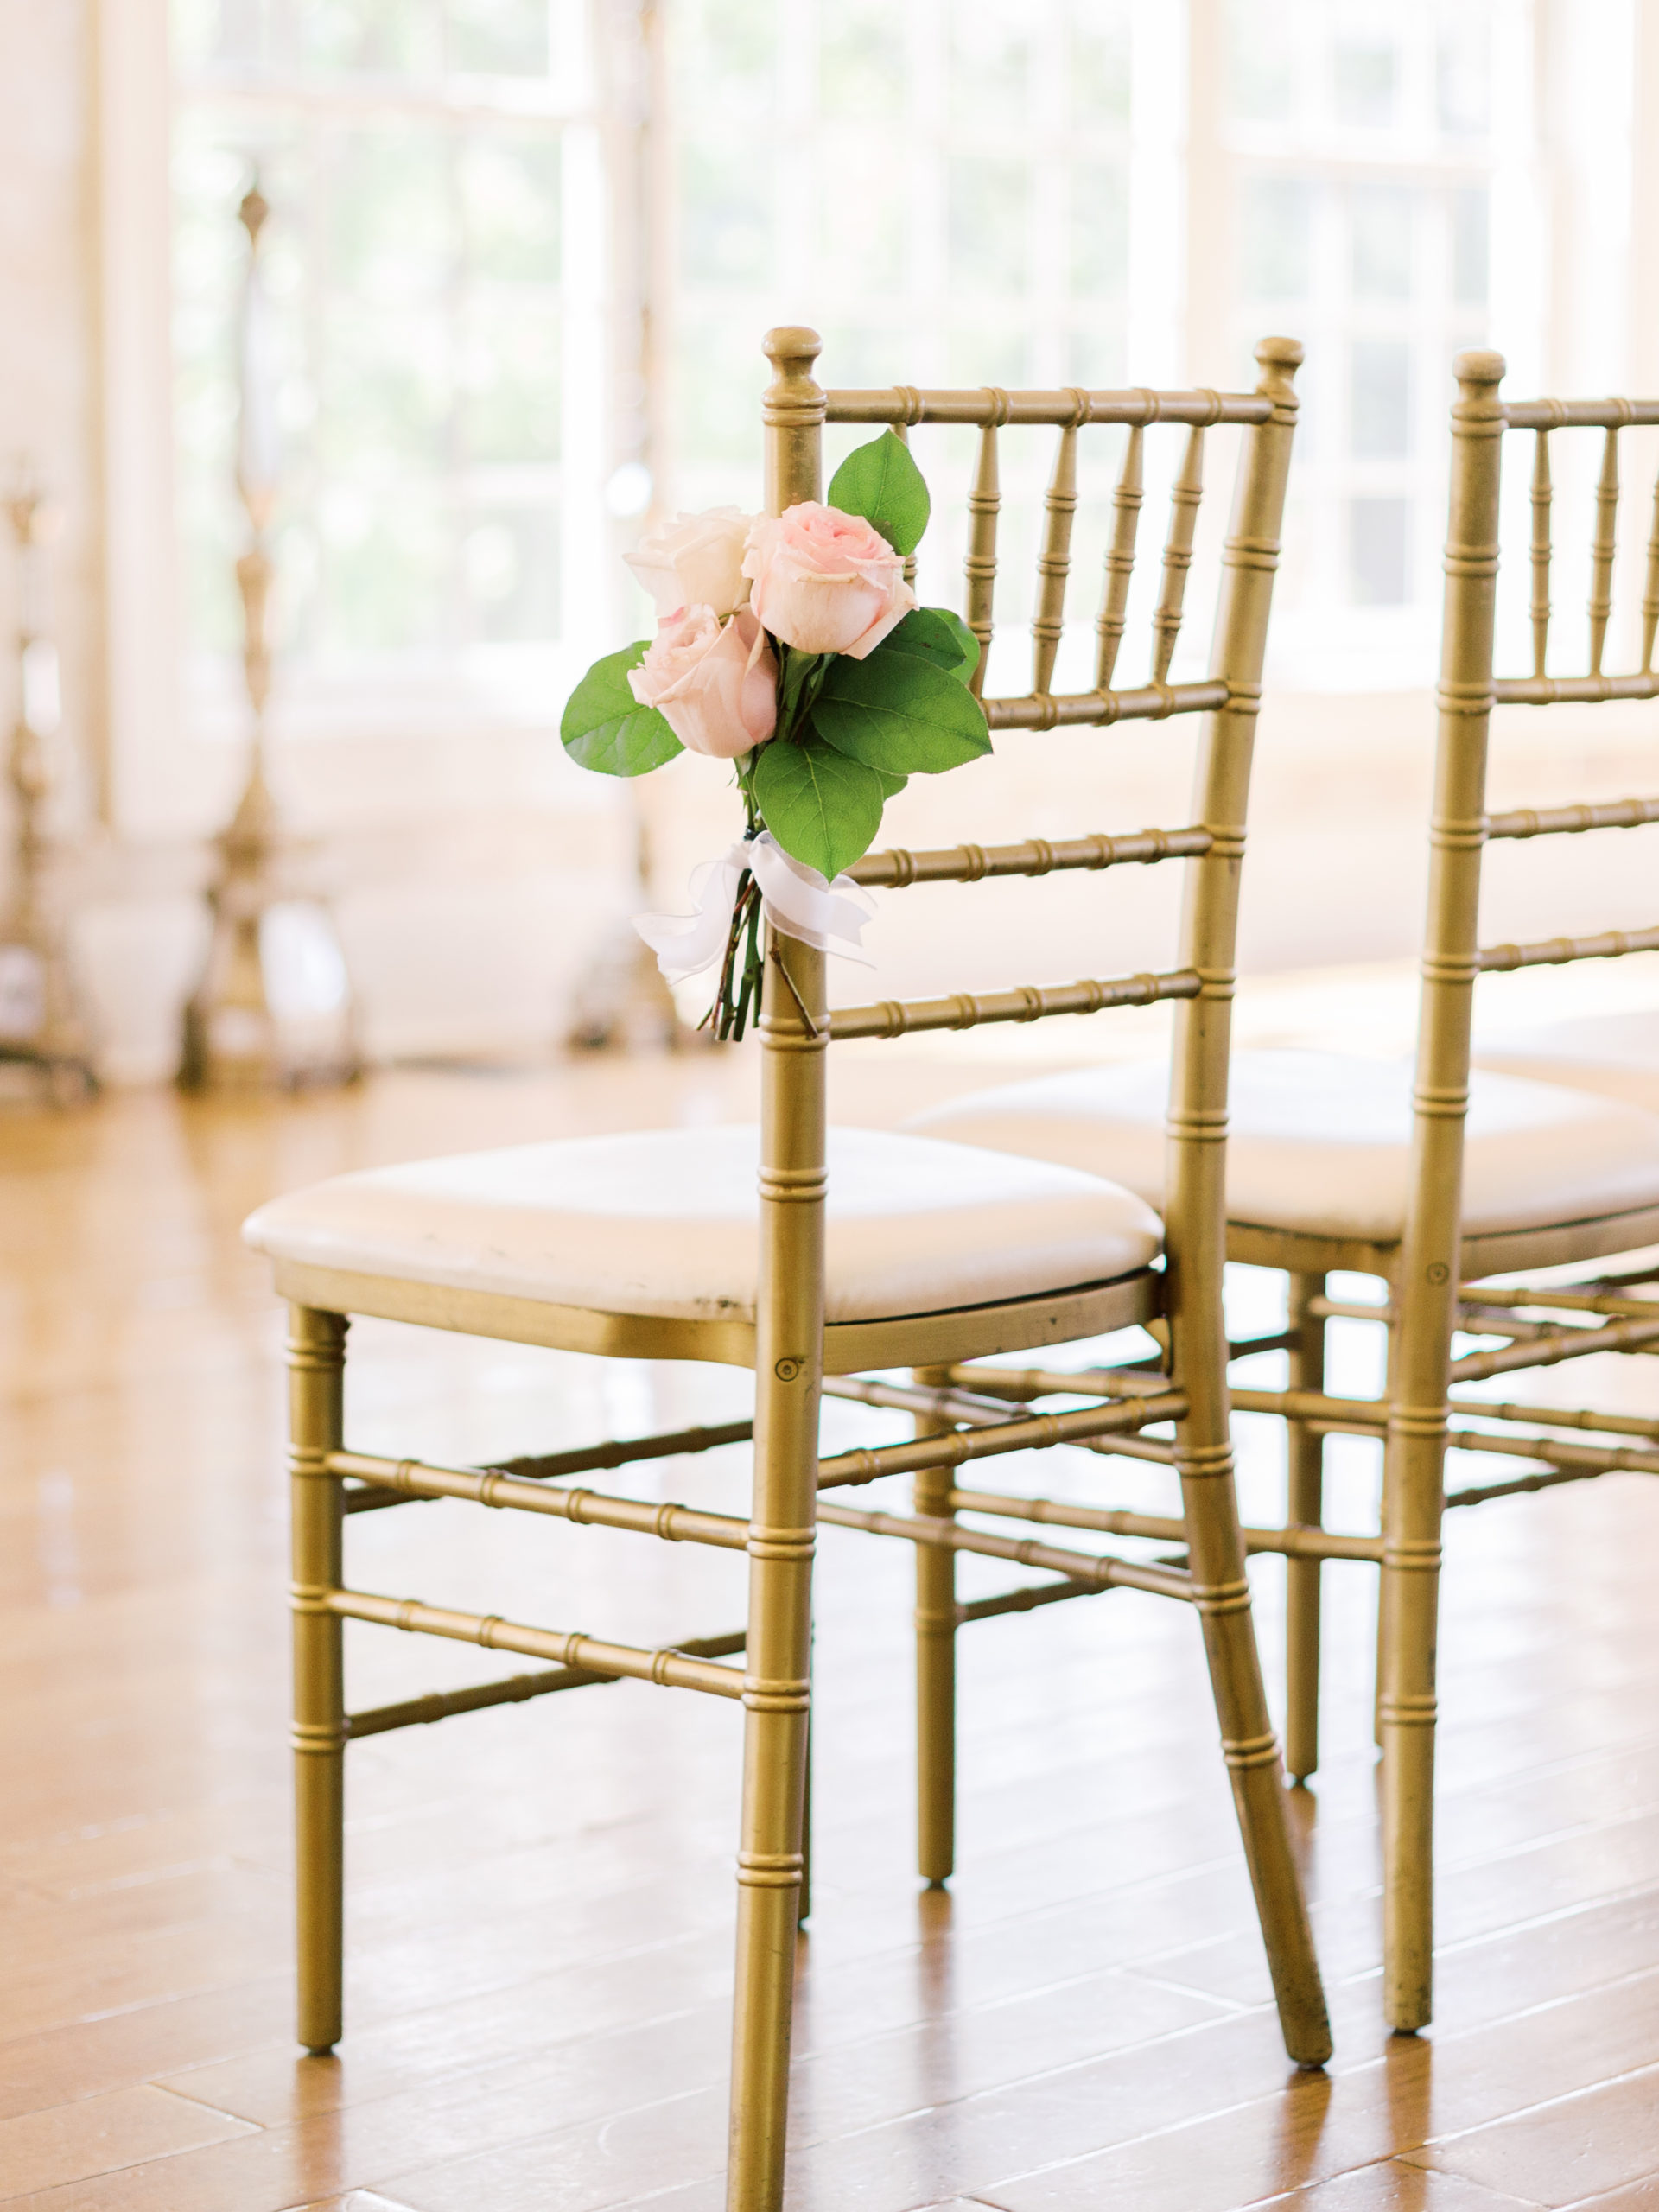 Summer wedding tips: Use chiavari chairs indoors.